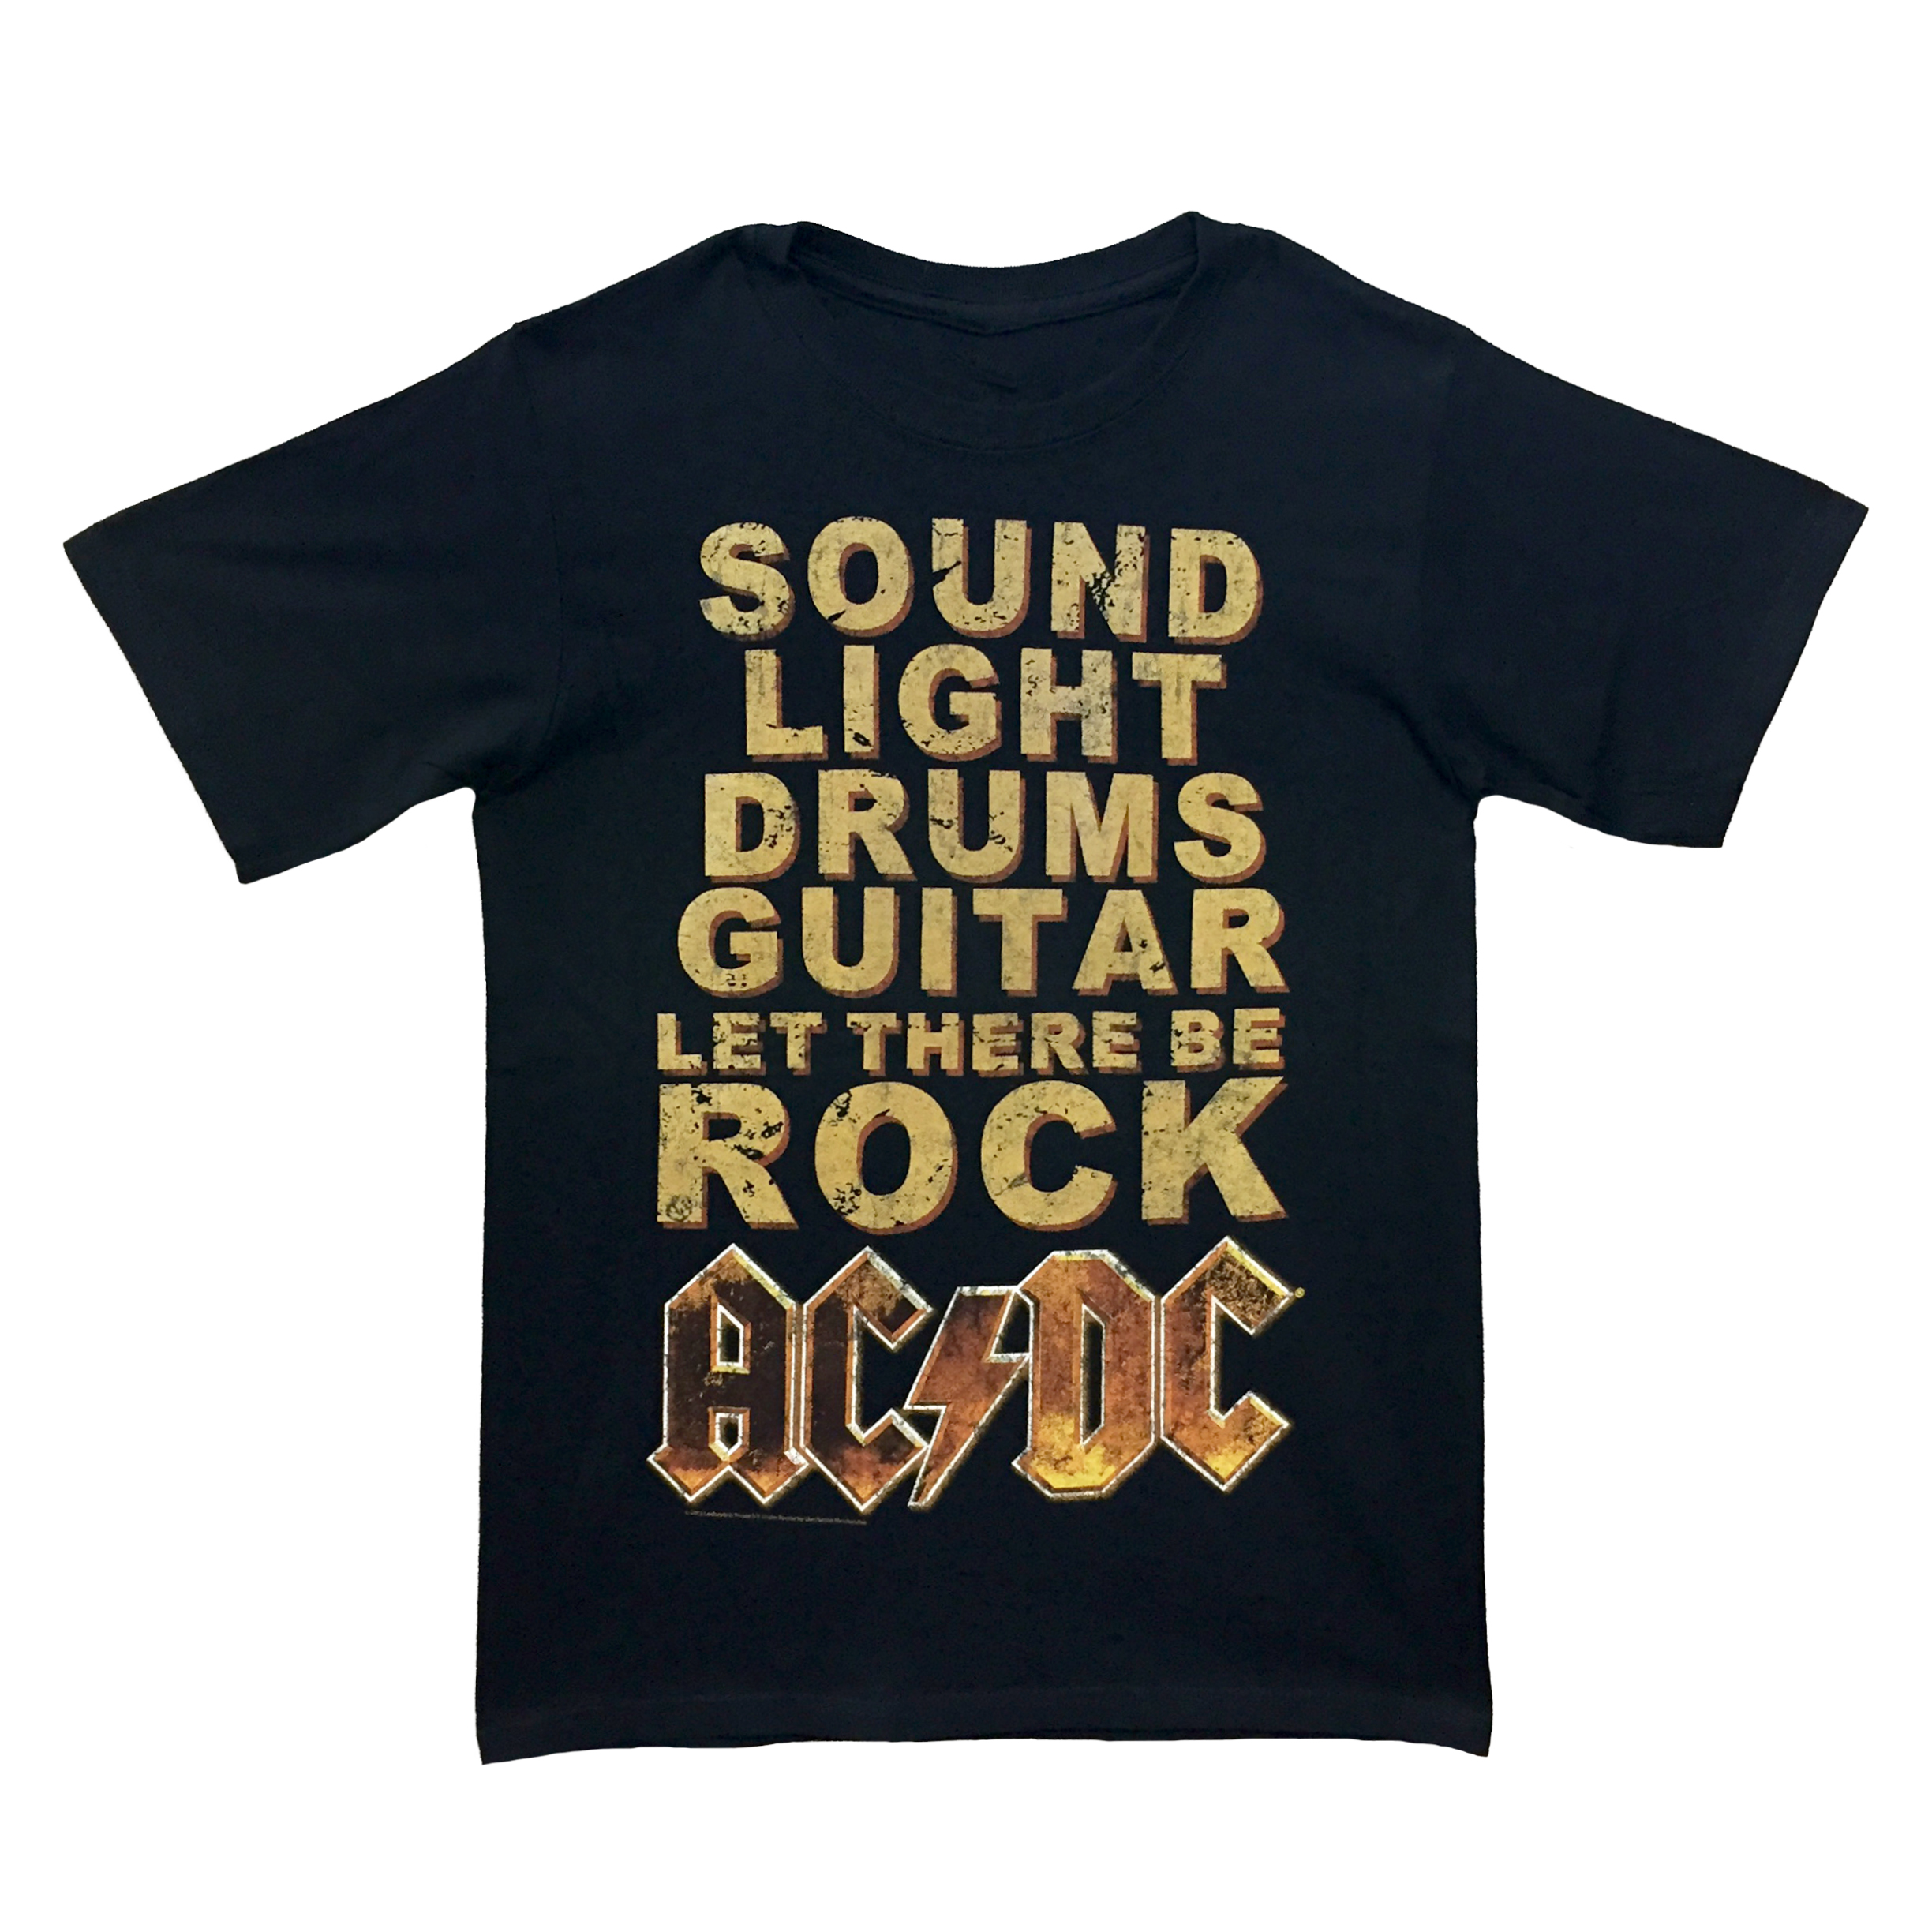 The Sound Of AC-DC